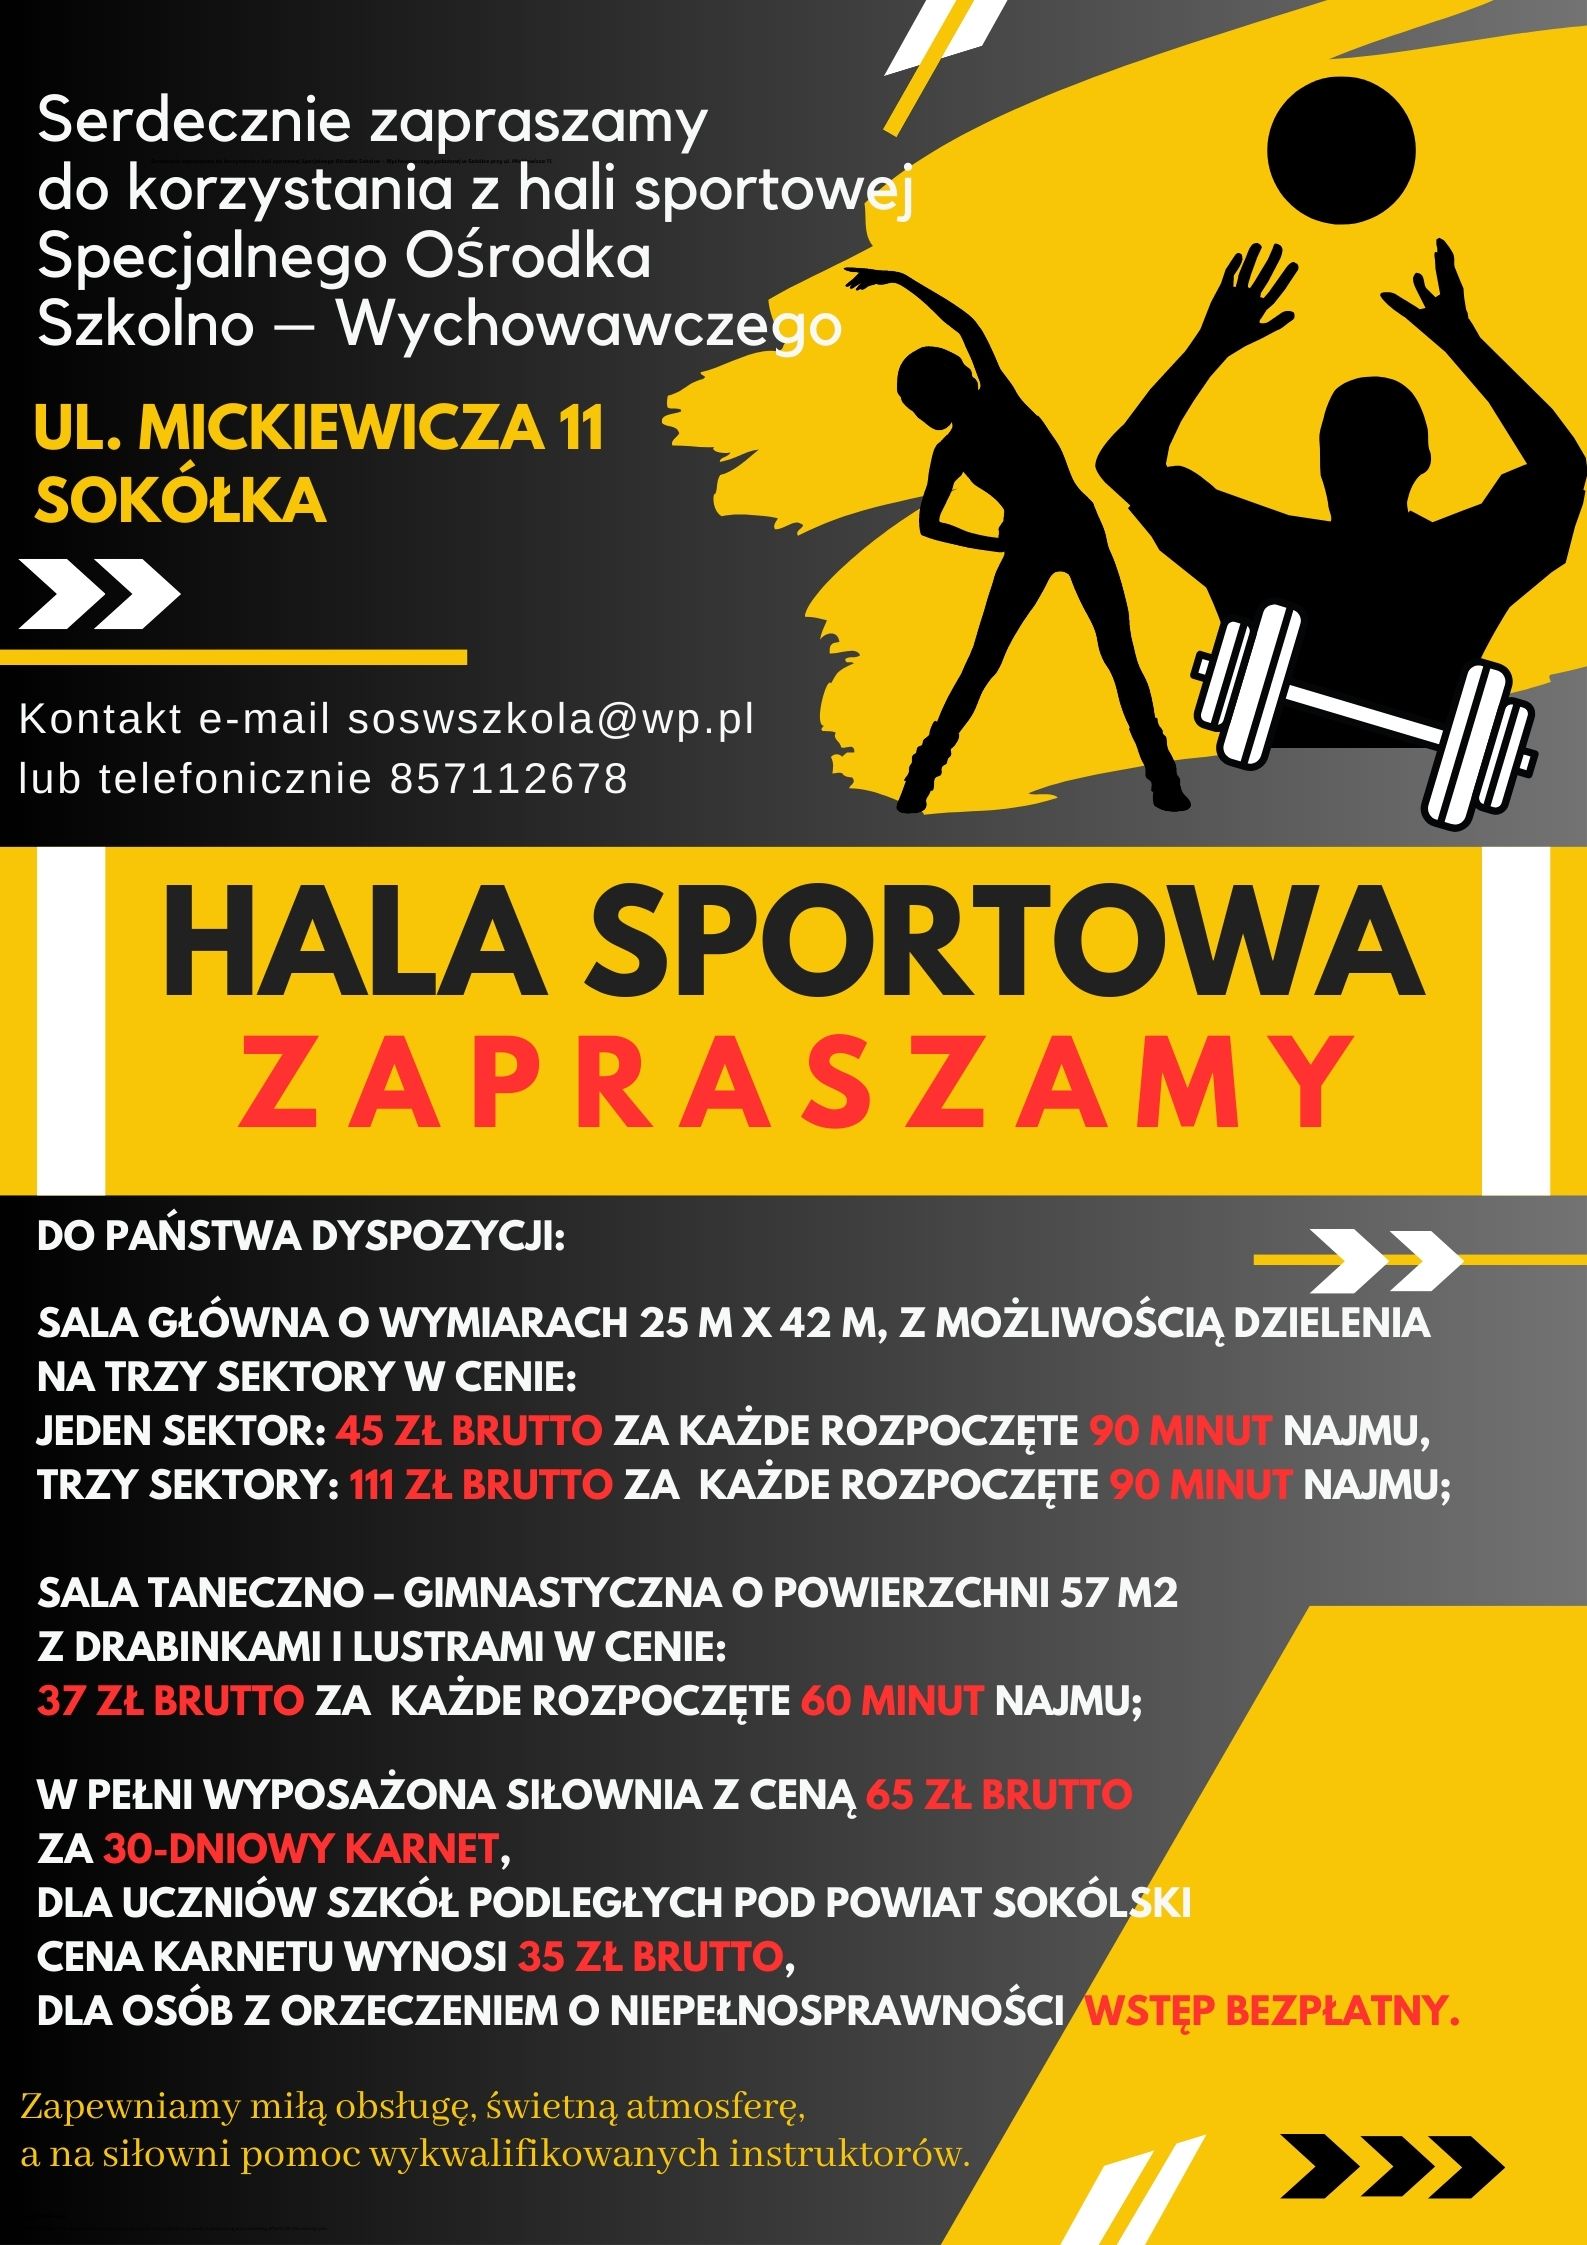 https://www.soswsokolka.pl/images/hala_sportowa_z_a_p_r_a_s_z_a_m_y.jpg